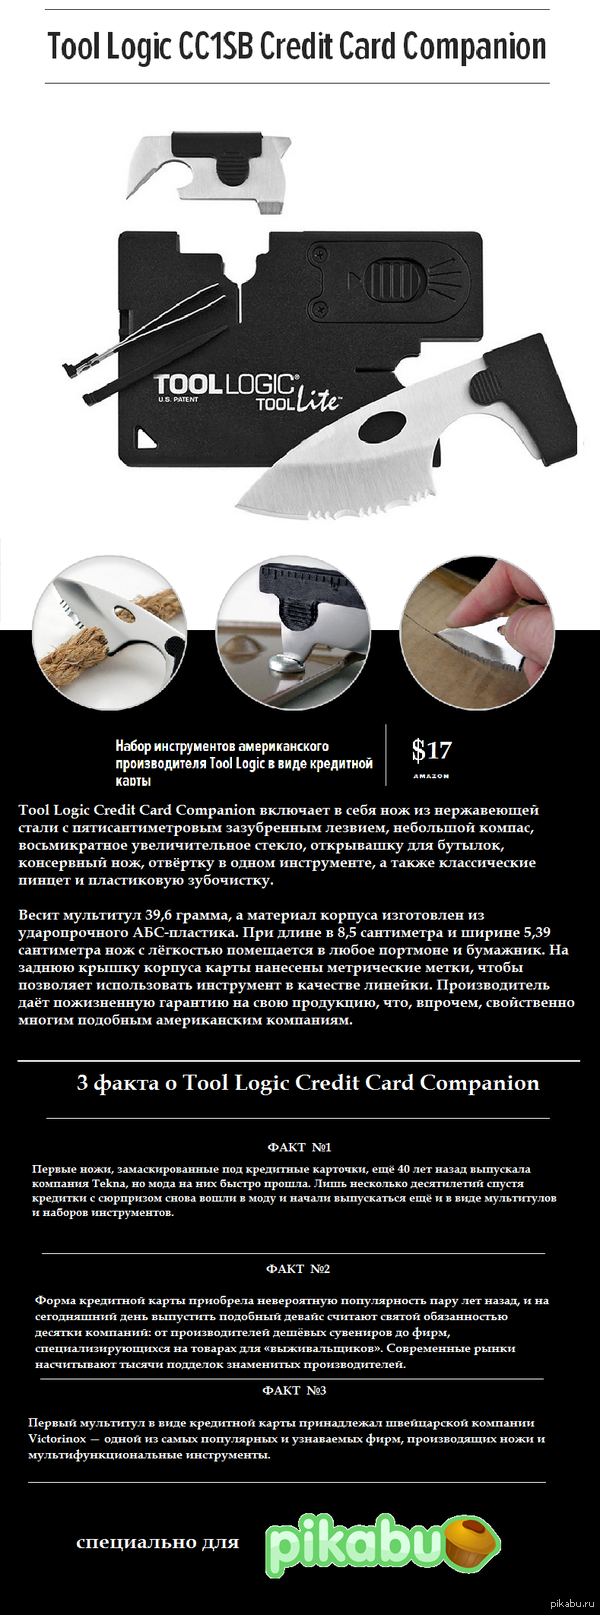       Tool Logic CC1SB Credit Card       Tool Logic,     .